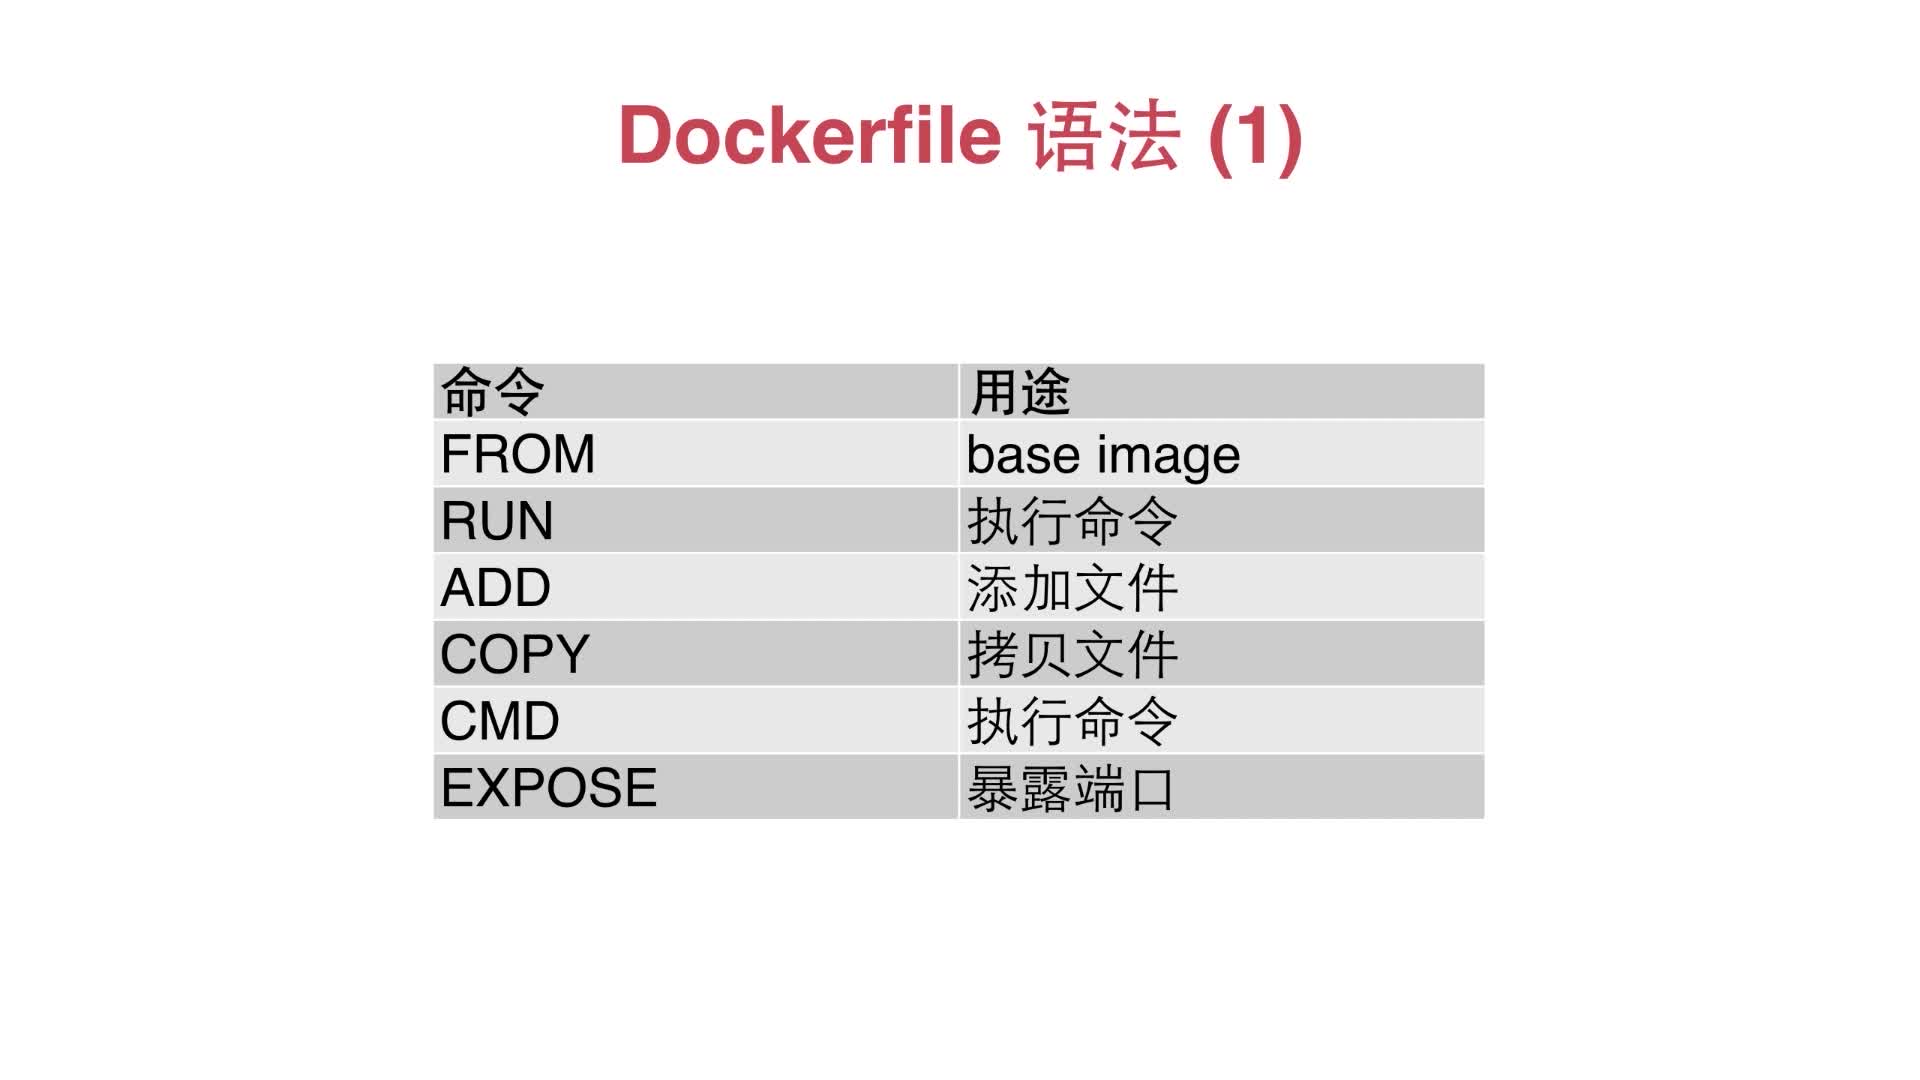 Dockerfile 语法1